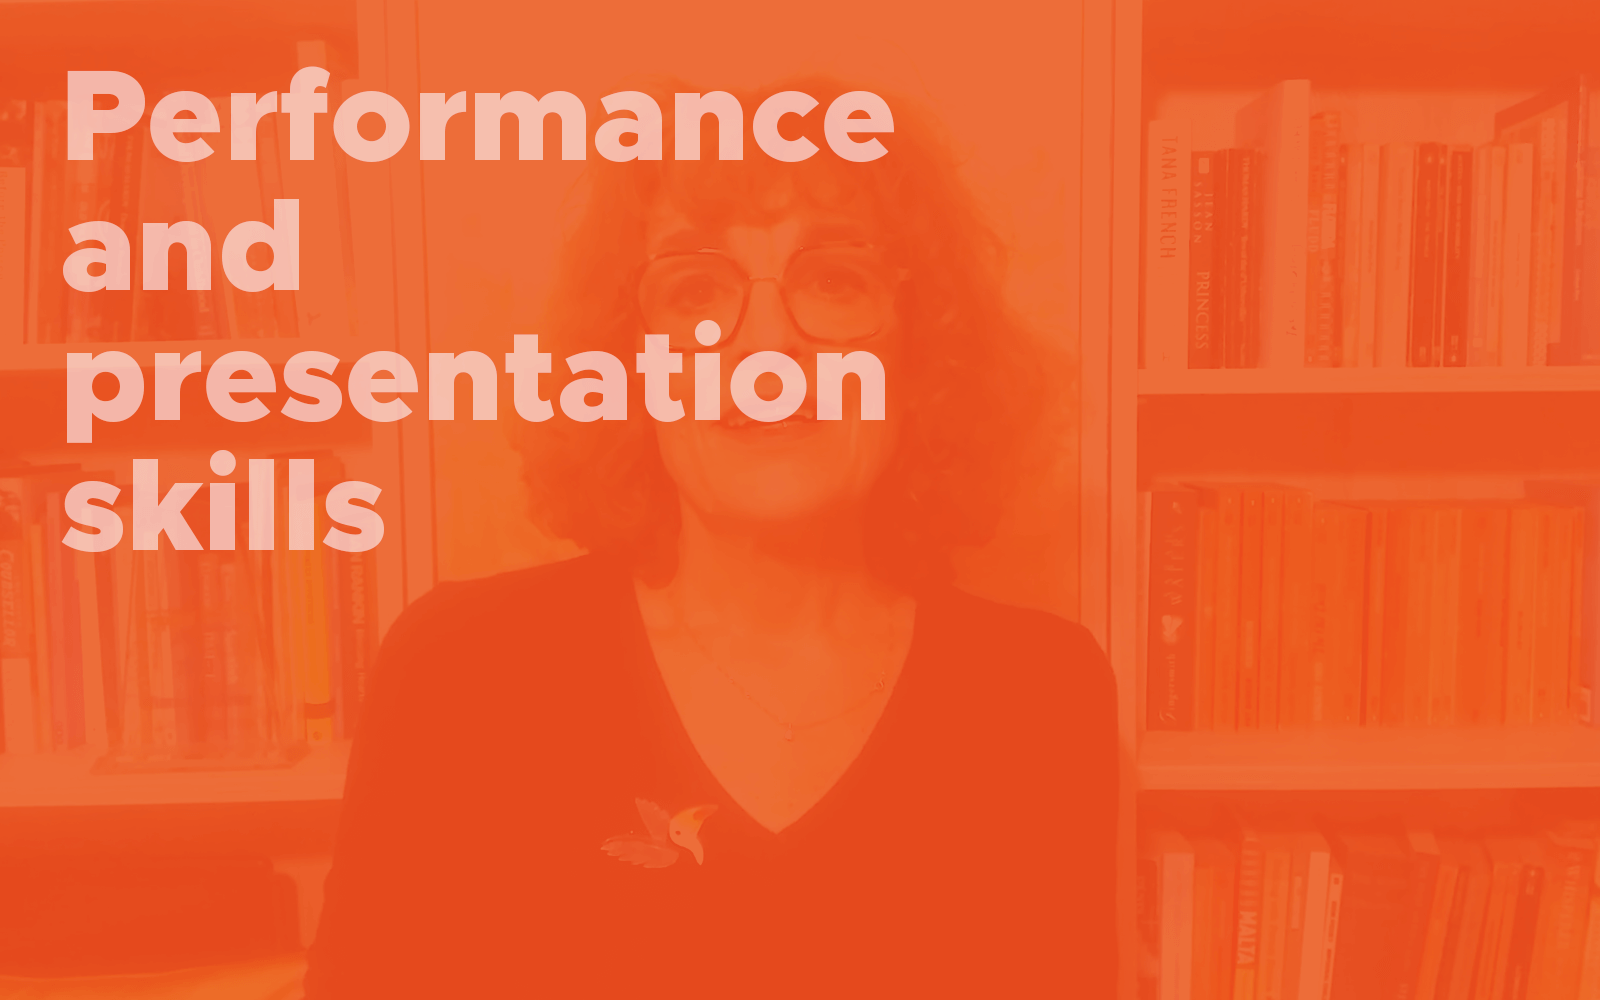 Performance and presentation skills